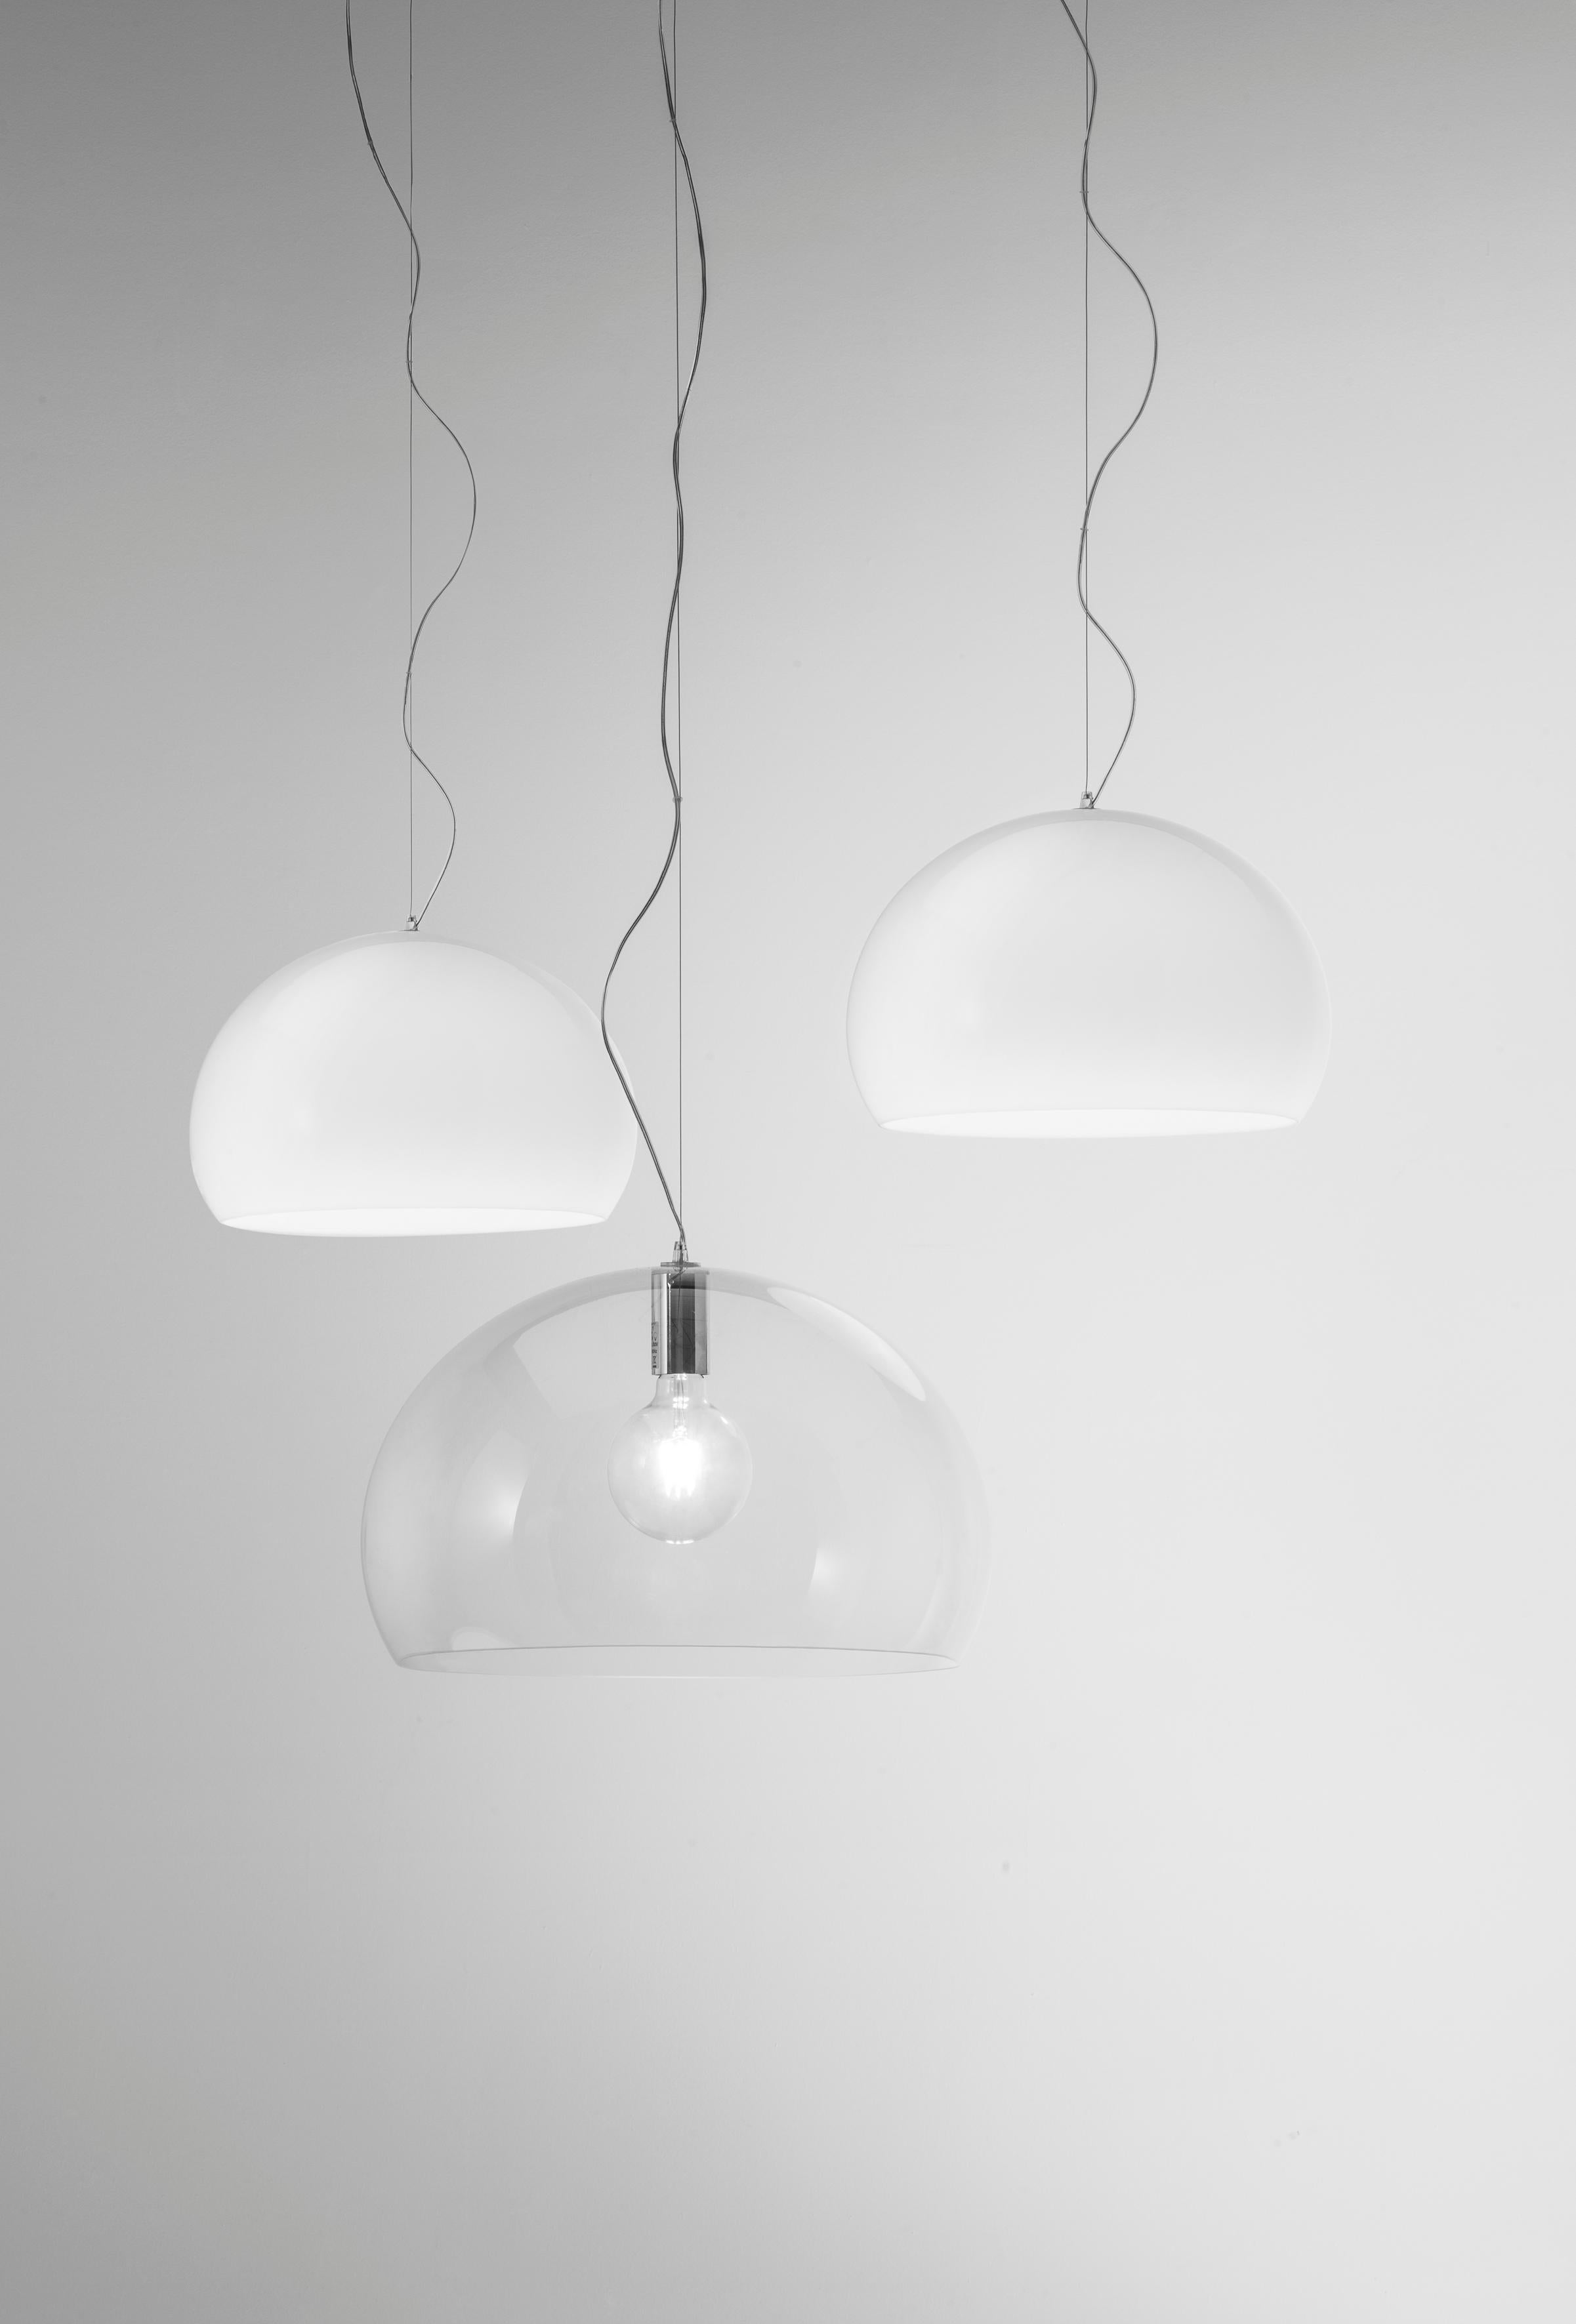 Resin Kartell Medium FL/Y Pendant Light in Chrome by Ferruccio Laviani For Sale